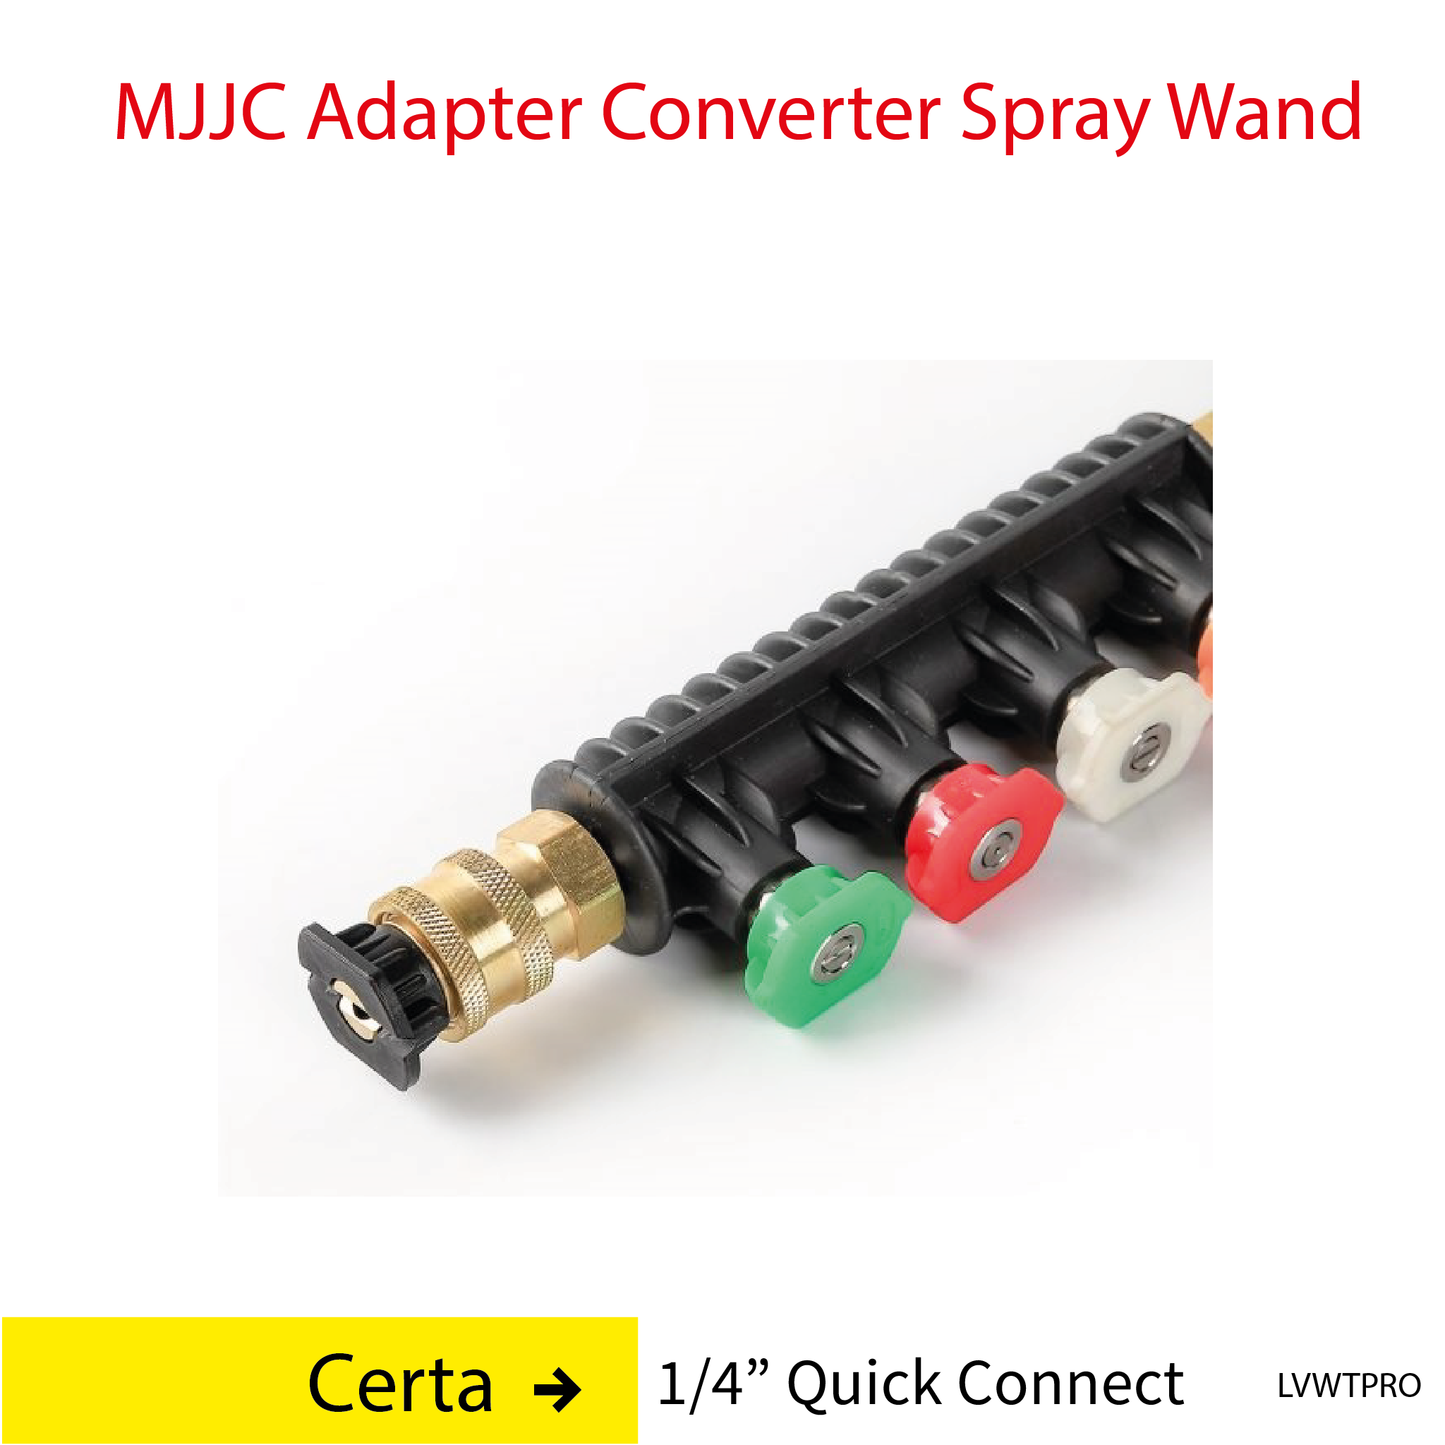 Certa MJJC Adapter Conversion Converter pressure washer Spray Wand with 5 spray tips